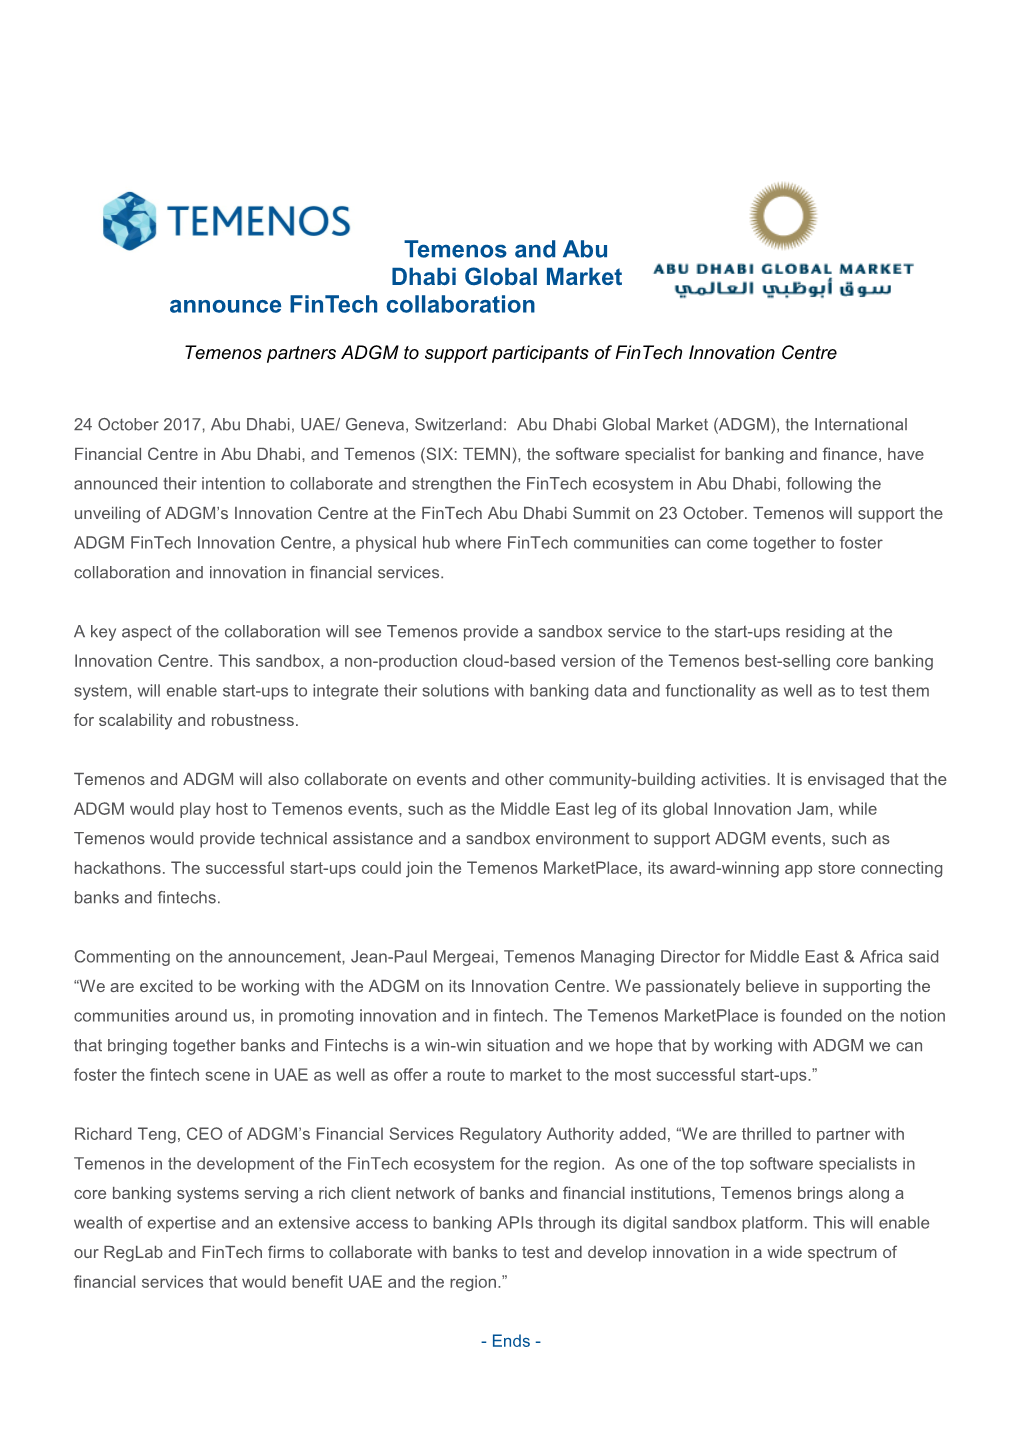 Temenos and Microsoft Partner